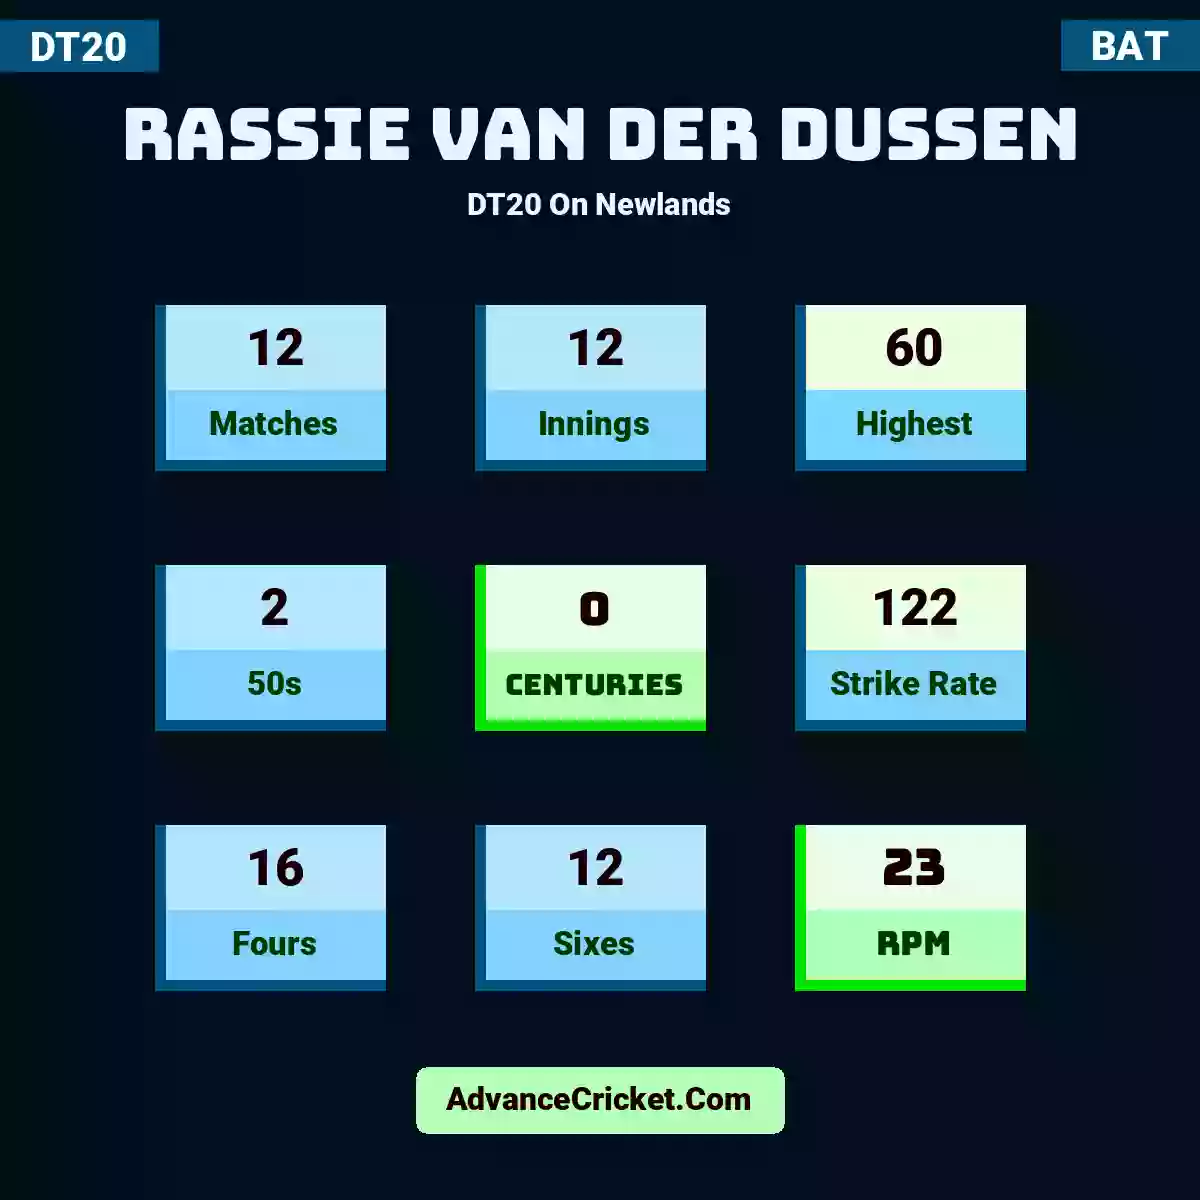 Rassie van der Dussen DT20  On Newlands, Rassie van der Dussen played 12 matches, scored 60 runs as highest, 2 half-centuries, and 0 centuries, with a strike rate of 122. R.Dussen hit 16 fours and 12 sixes, with an RPM of 23.